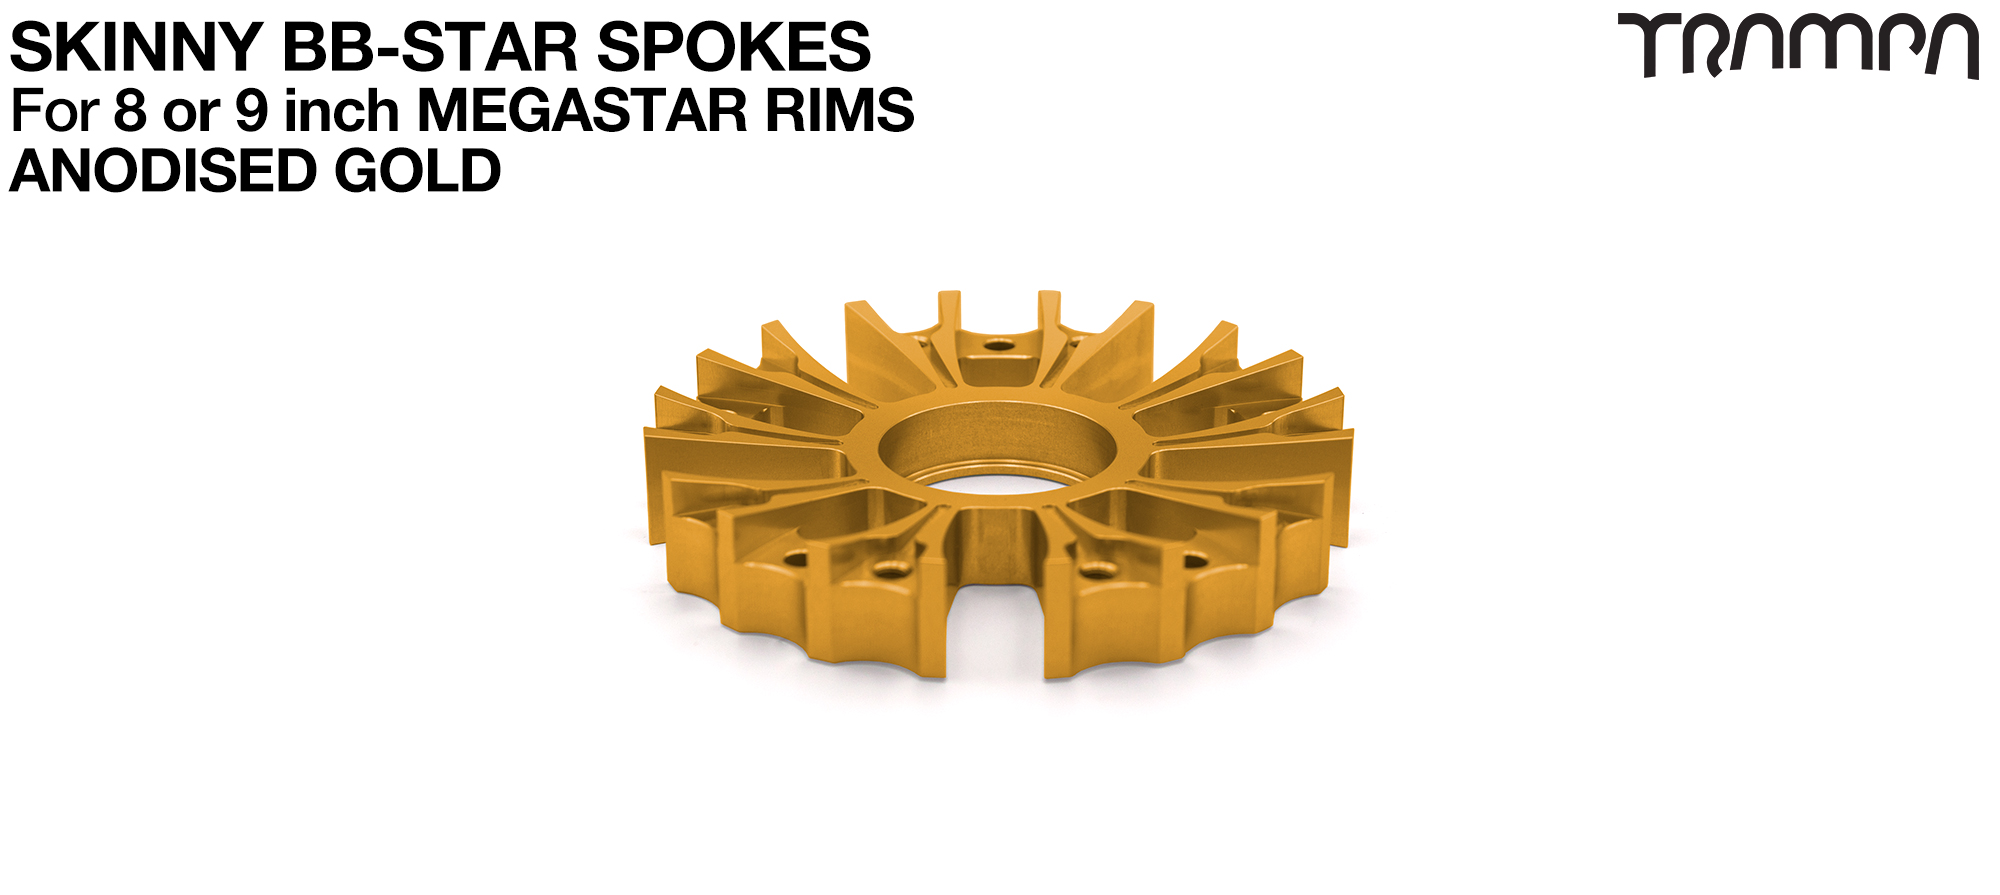 BBStar SKINNY Spoke for MEGASTAR 8 & 9 Rims - Extruded T6 Heat Treated & CNC Precision milled - GOLD